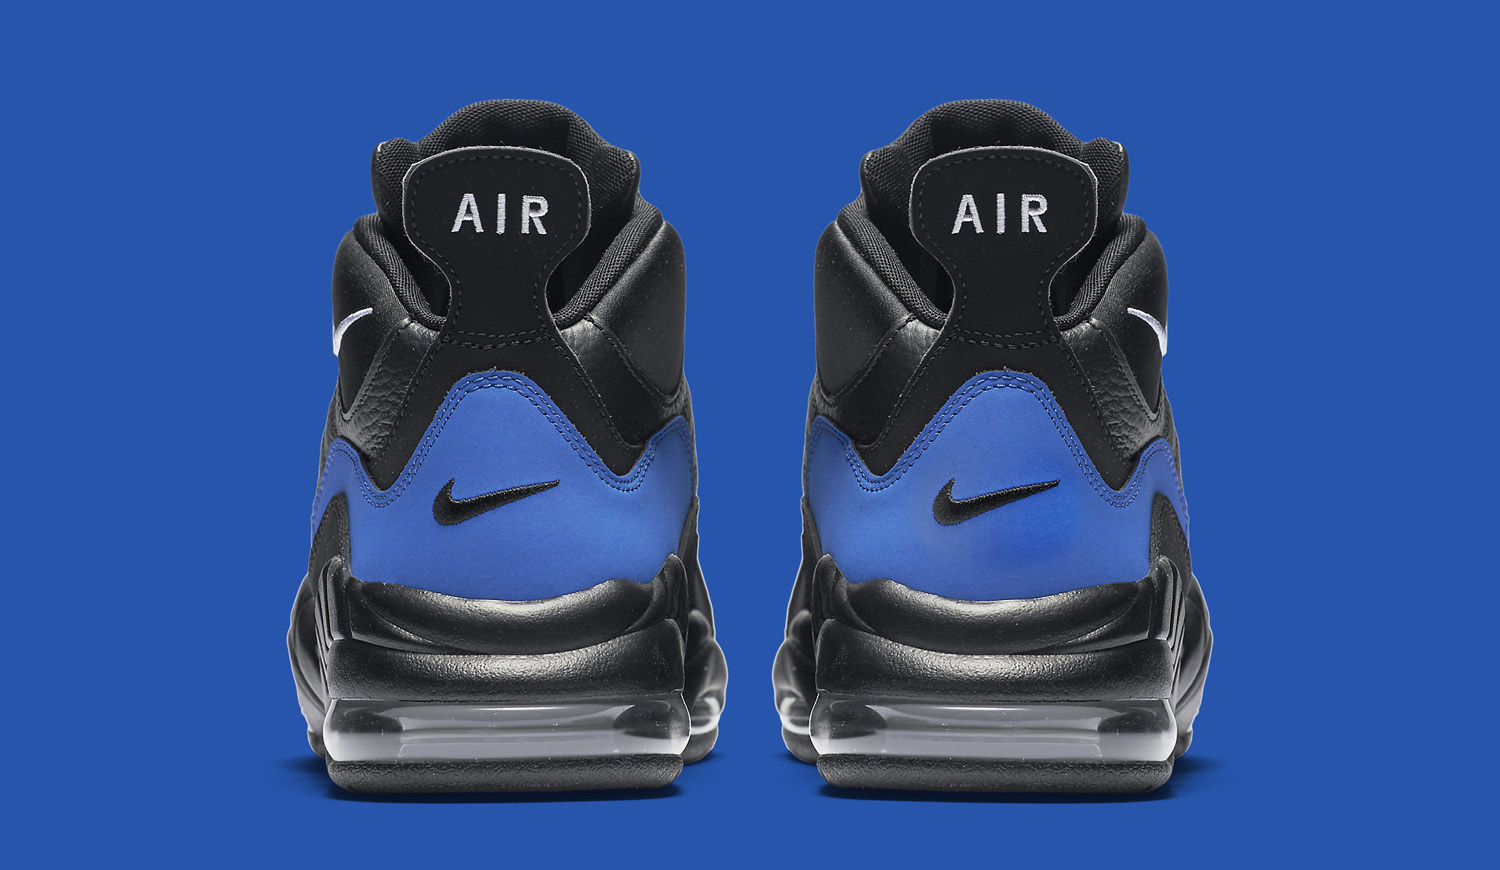 Chris Webber's Nike Air Max Sensation Rumored to Return in 2020